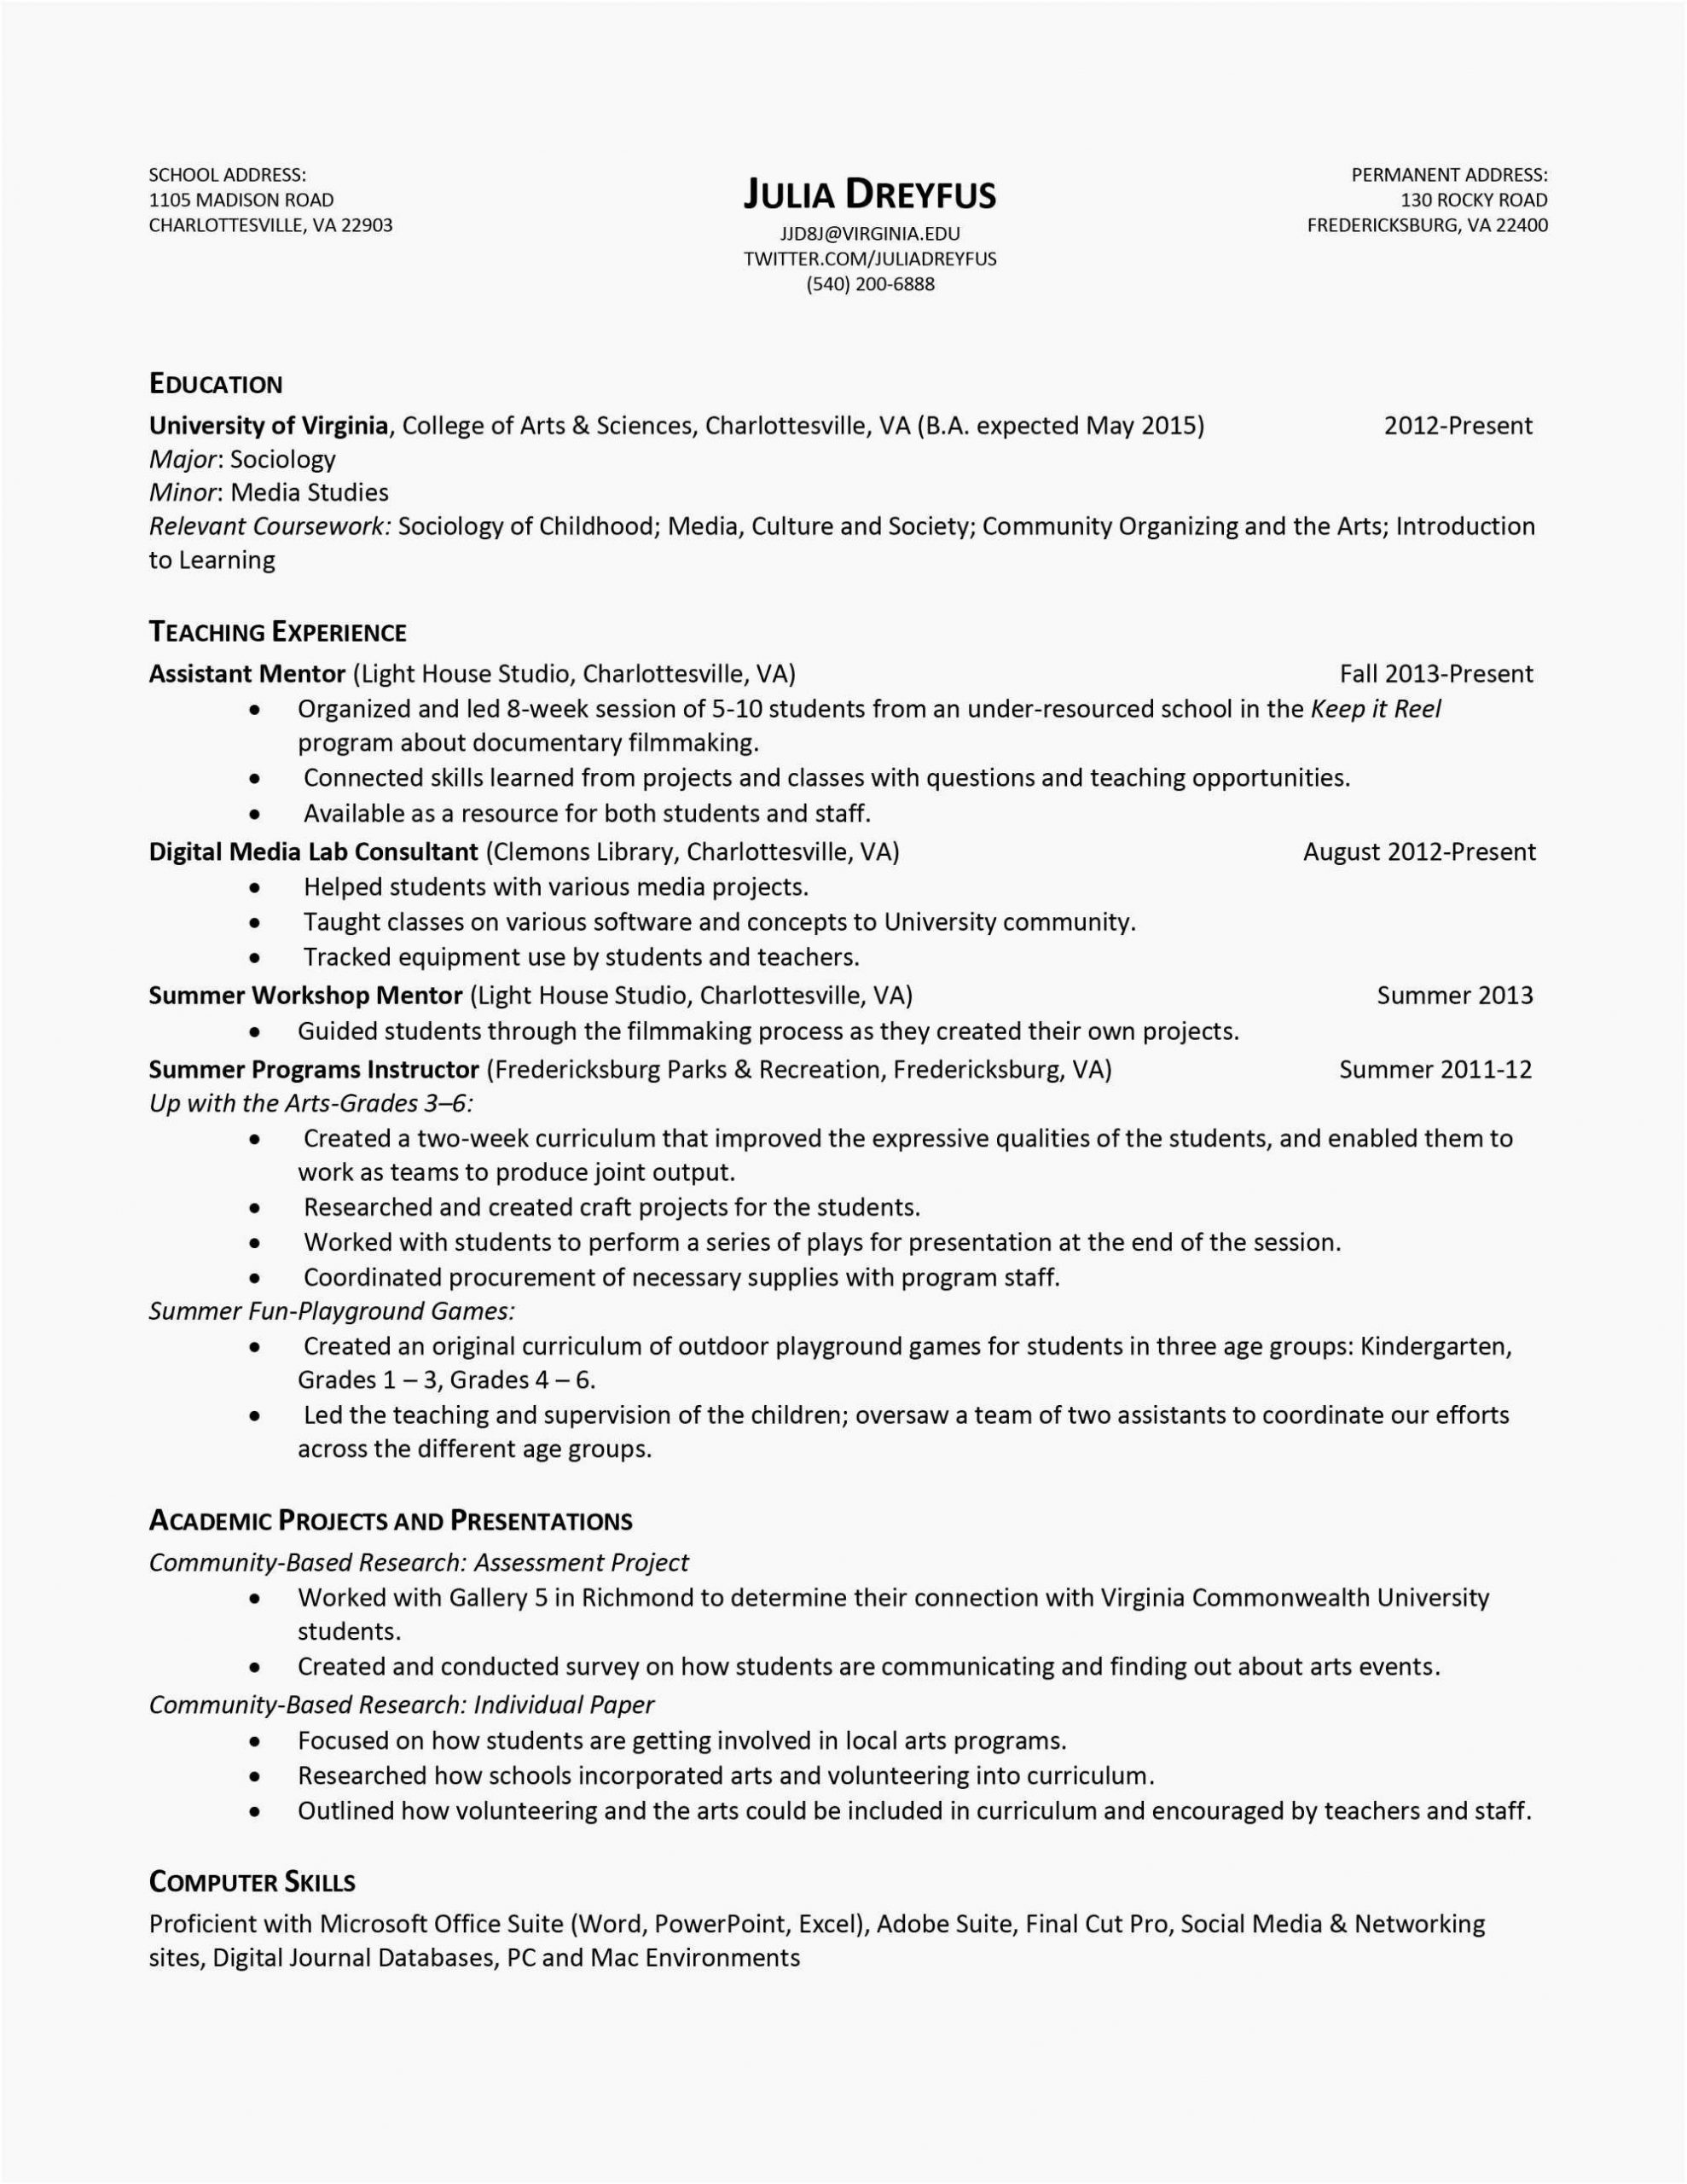 resume samples for puter science graduates